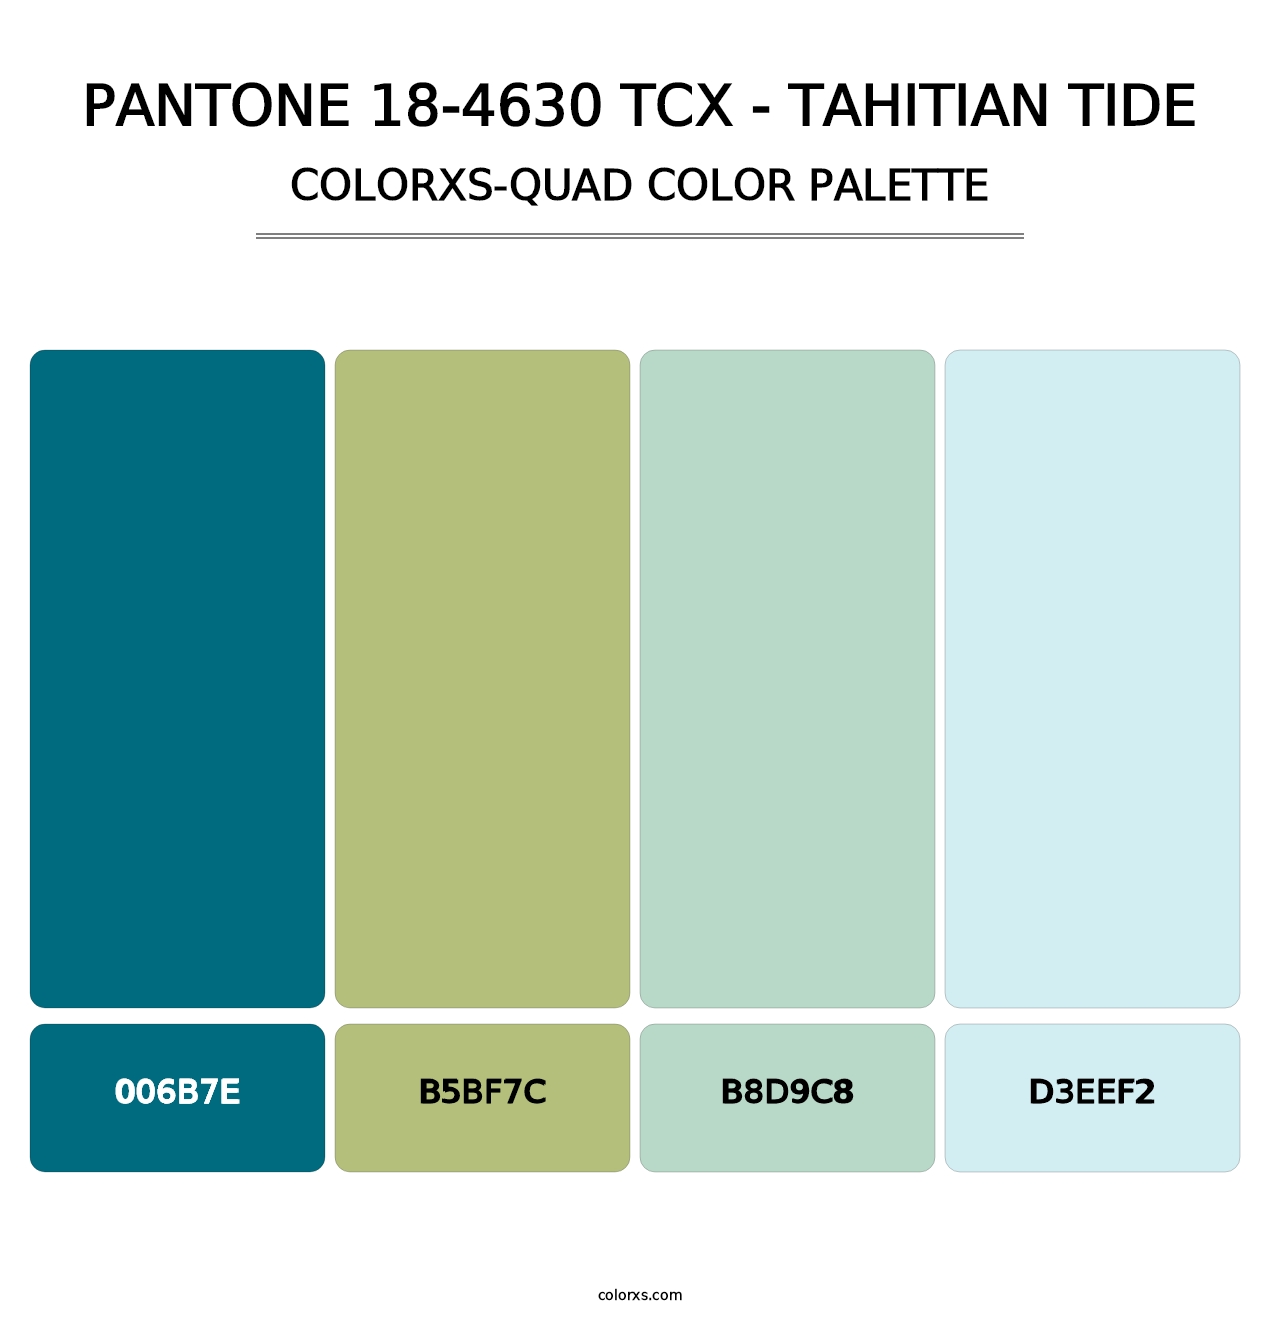 PANTONE 18-4630 TCX - Tahitian Tide - Colorxs Quad Palette